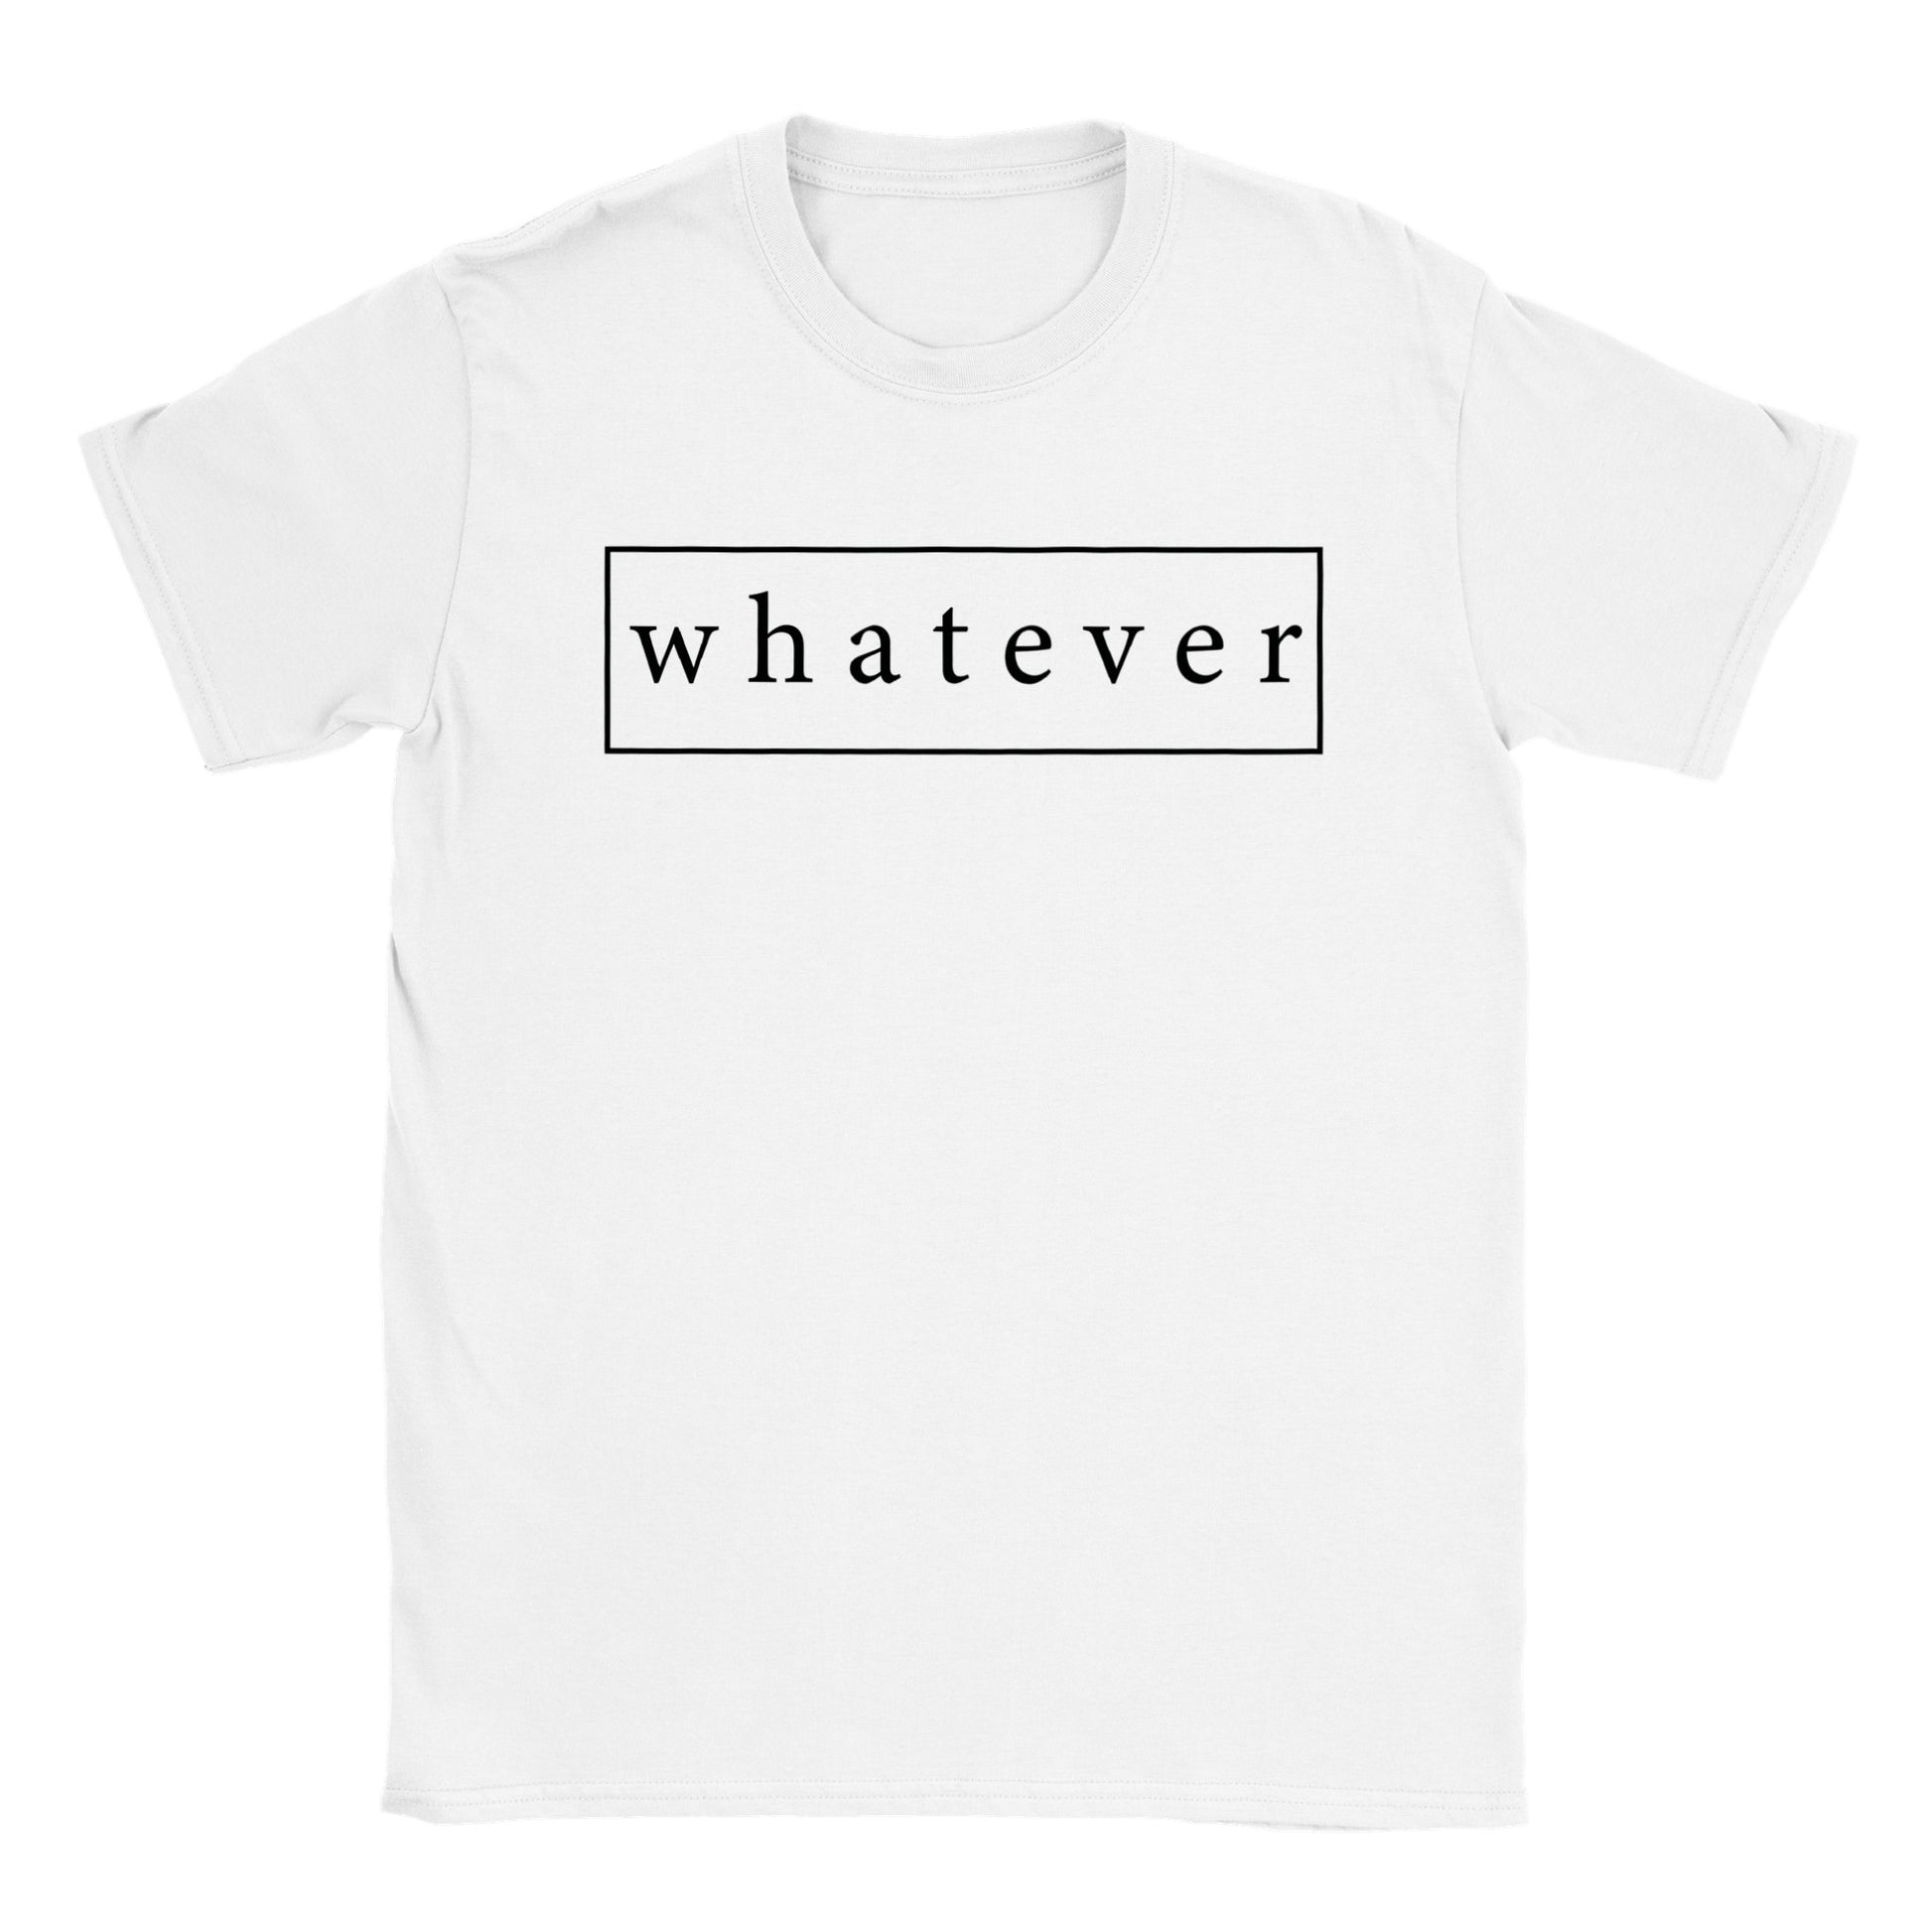 Whatever - Classic Unisex Crewneck T-shirt - Mister Snarky's